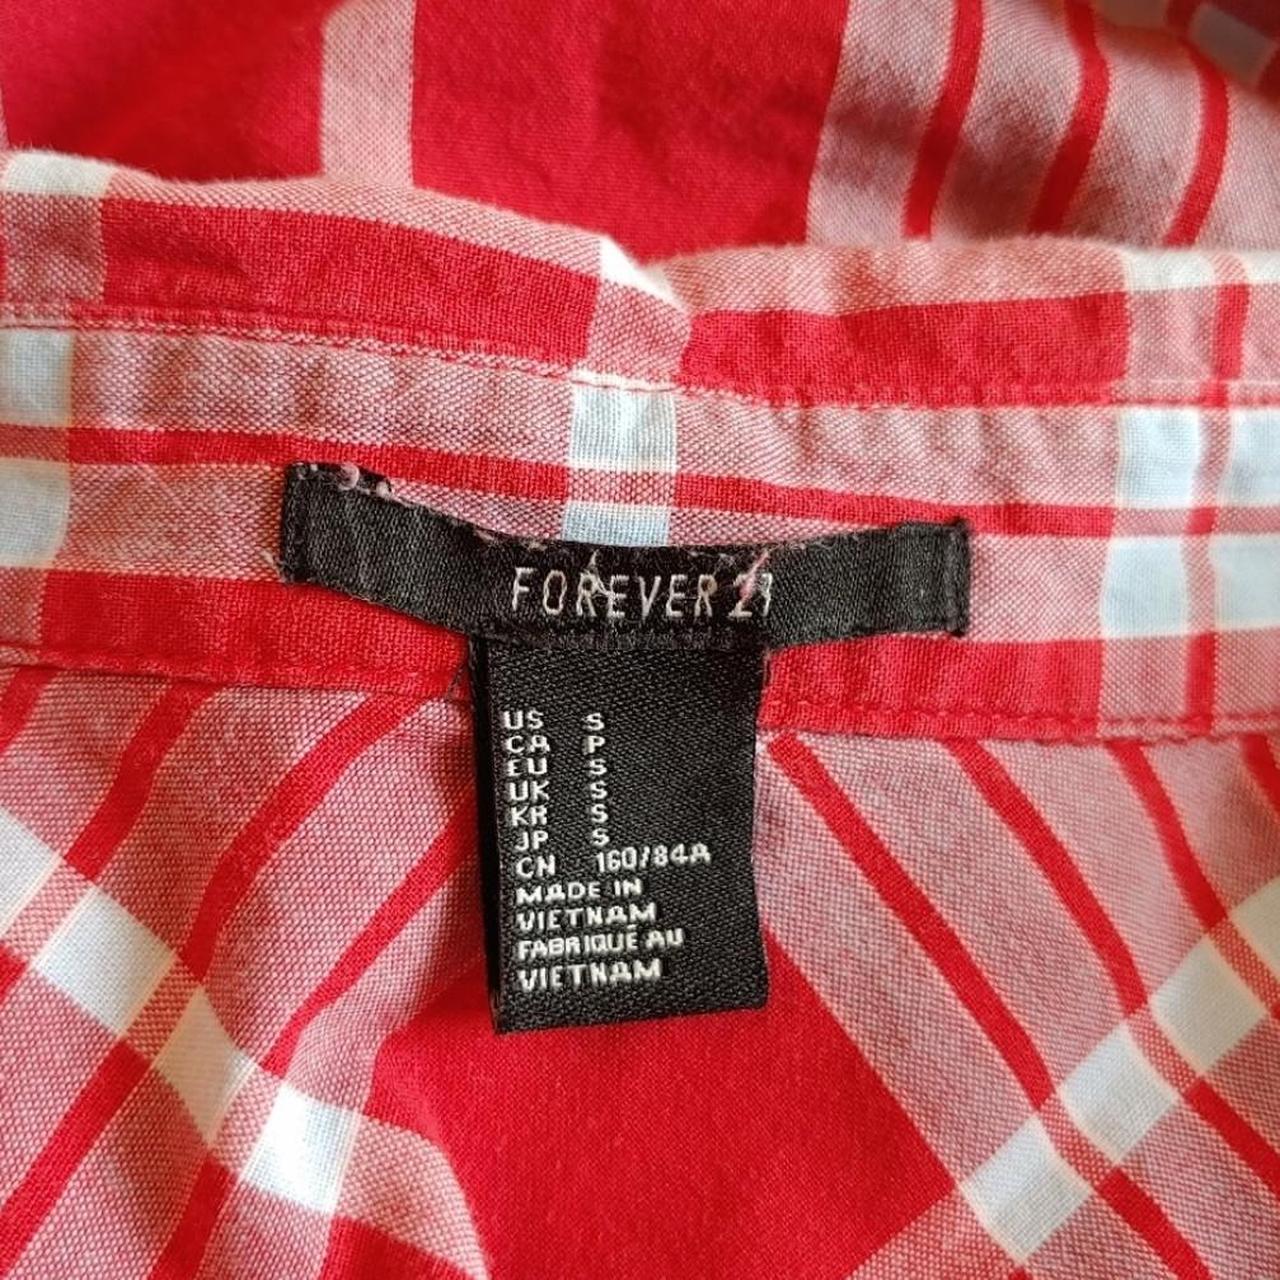 Product Image 3 - Forever 21 Boyfriend Plaid Shirt

Forever